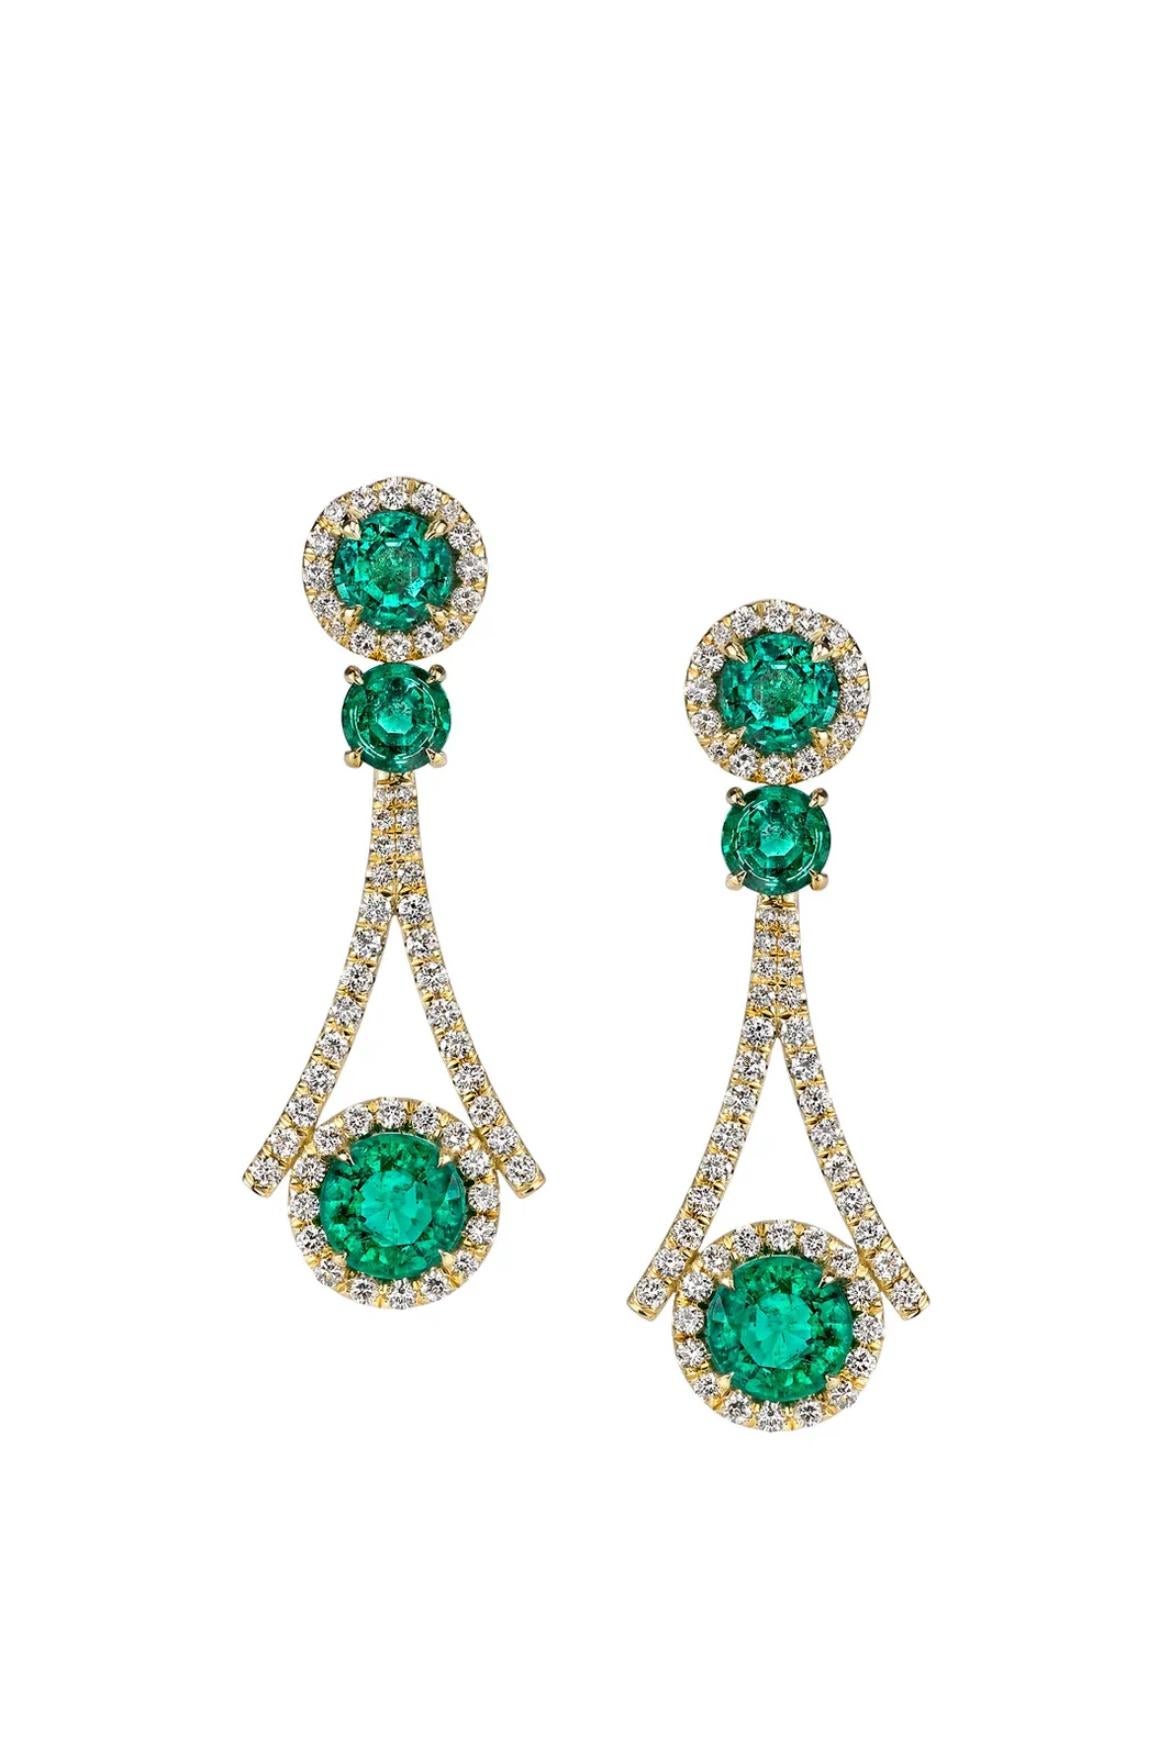 Round Cut 18K yellow gold, round-cut Zambian Emerald Earrings. 7.19 carats. For Sale